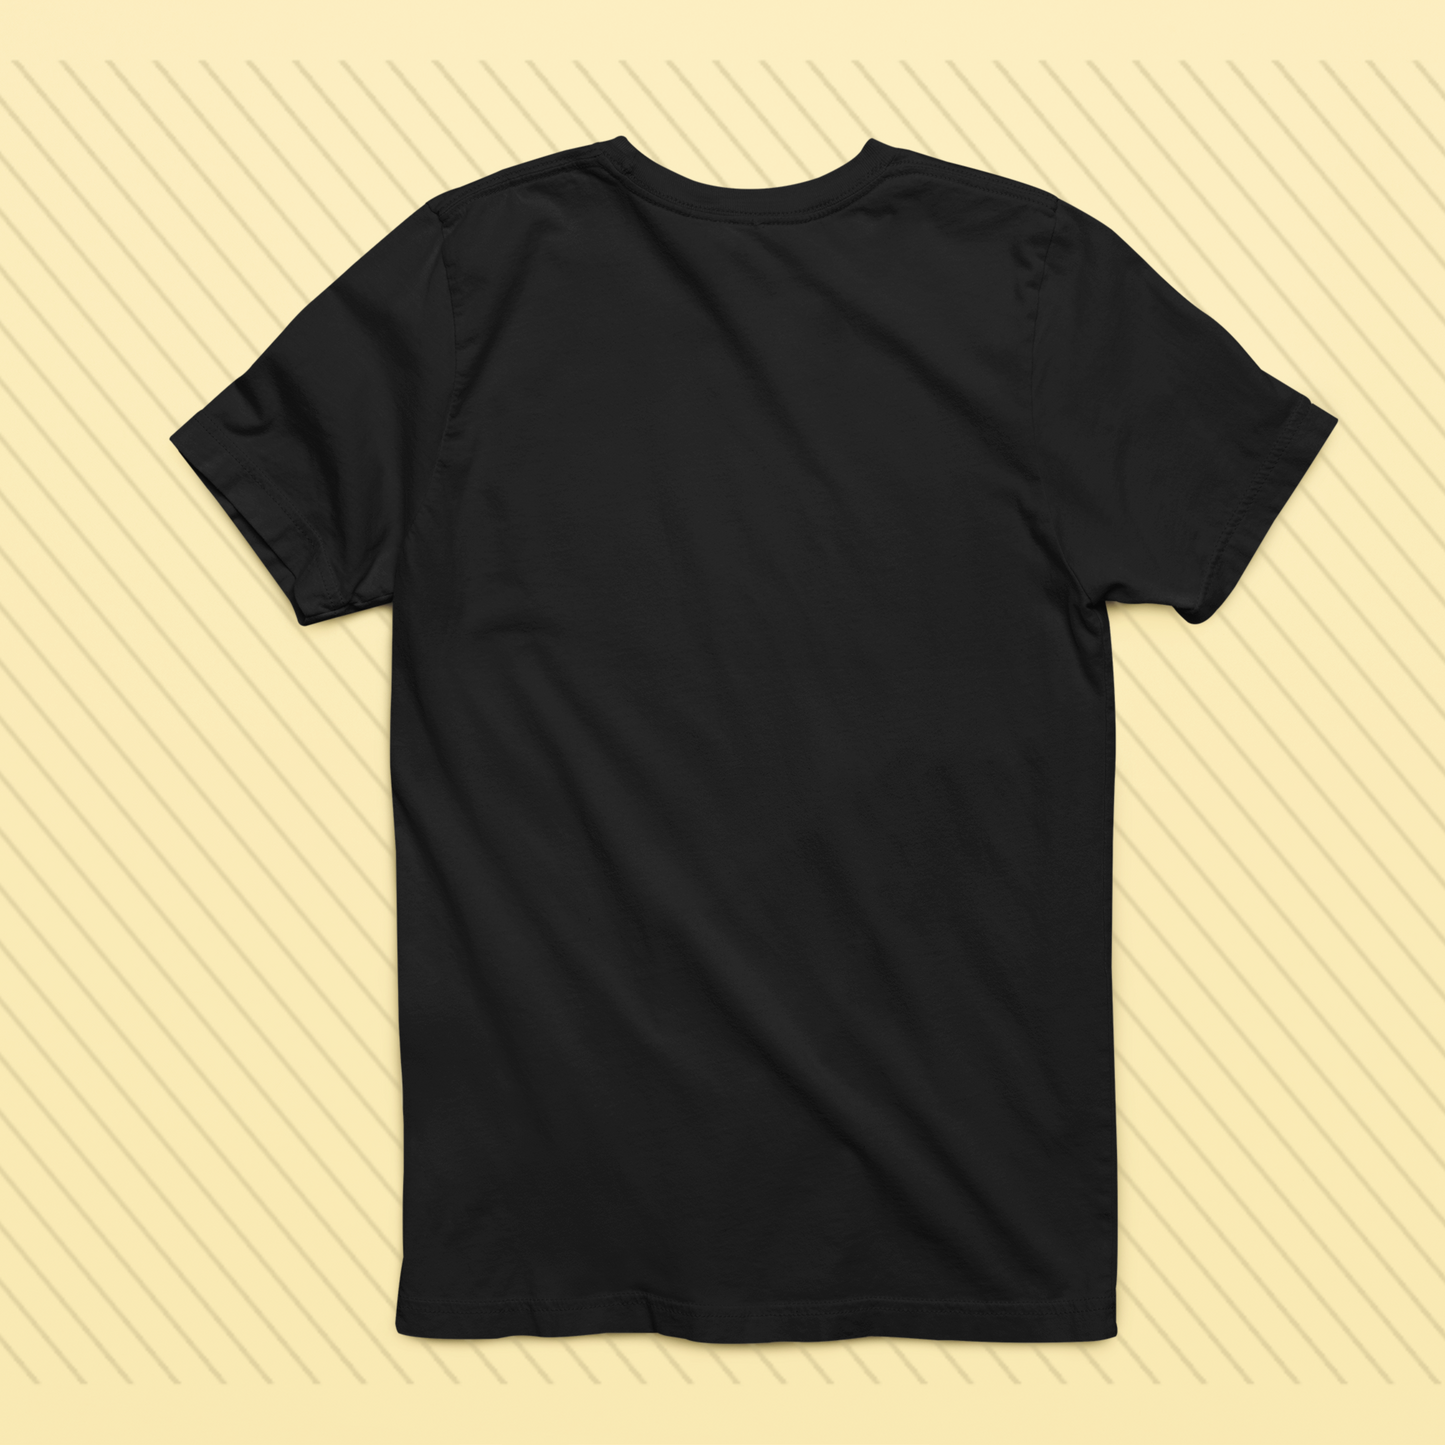 Solid Royal Black Round Neck Cotton T-Shirt